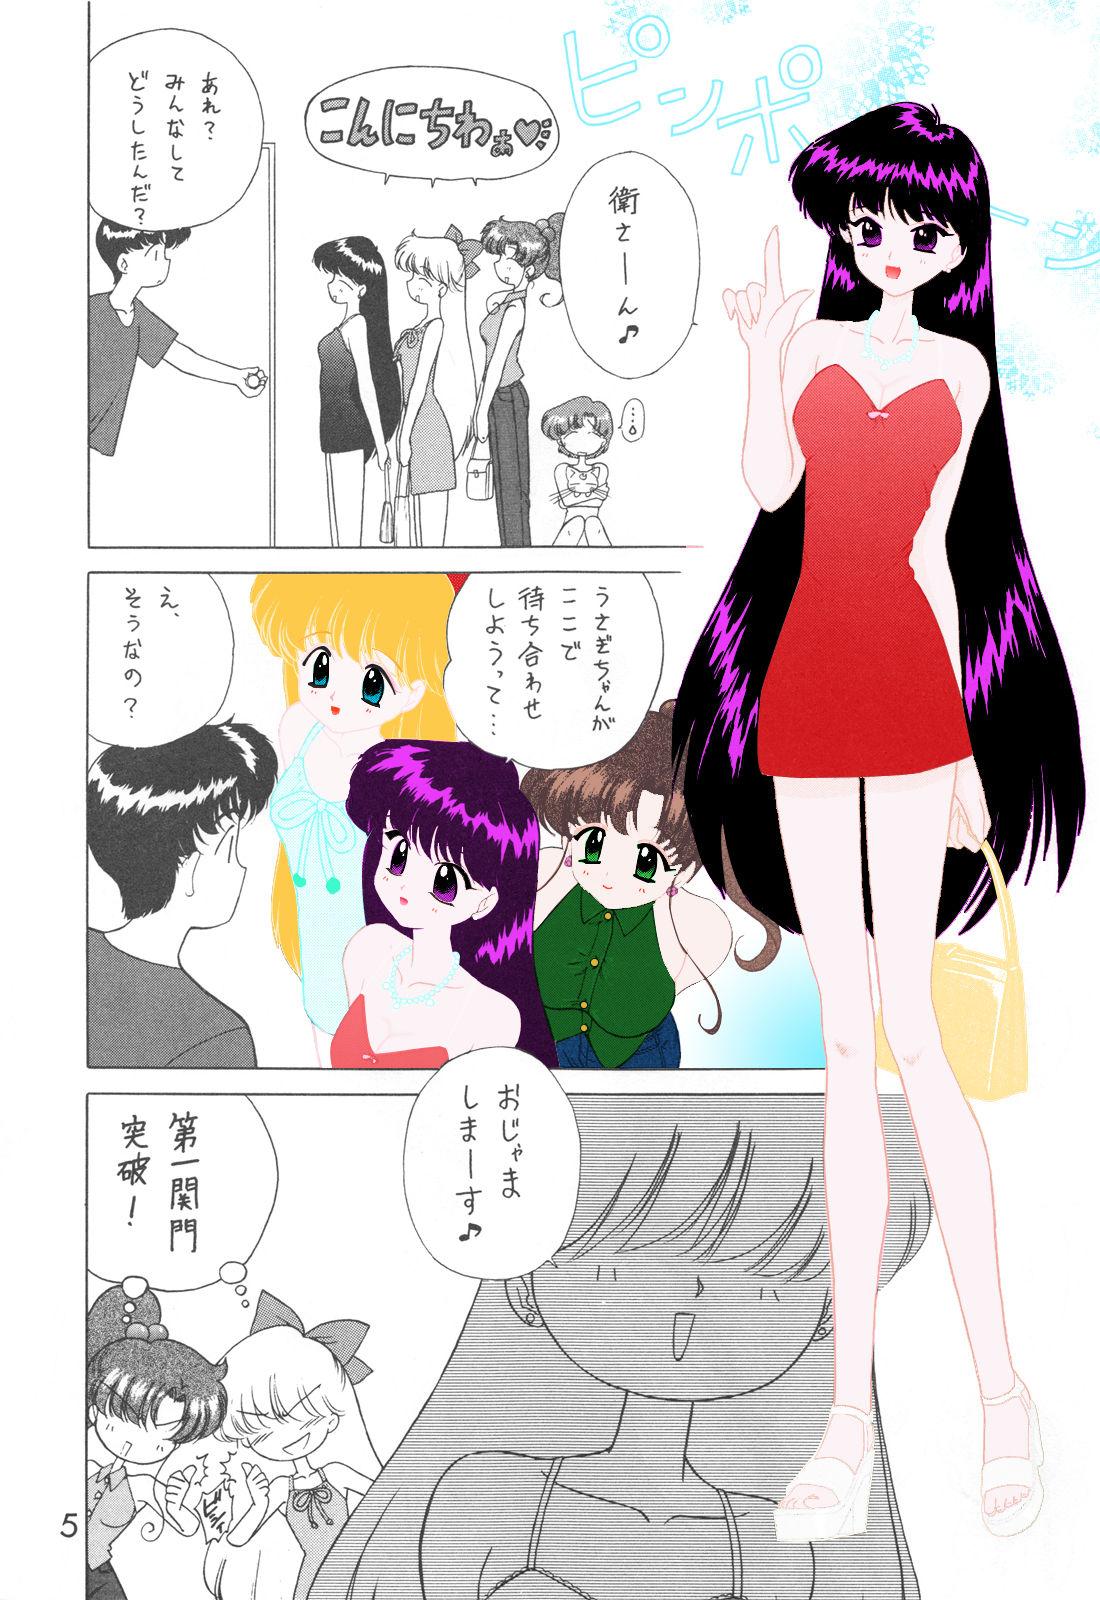 Anime How to colorize and examples - Sailor moon | bishoujo senshi sailor moon Affair - Page 2